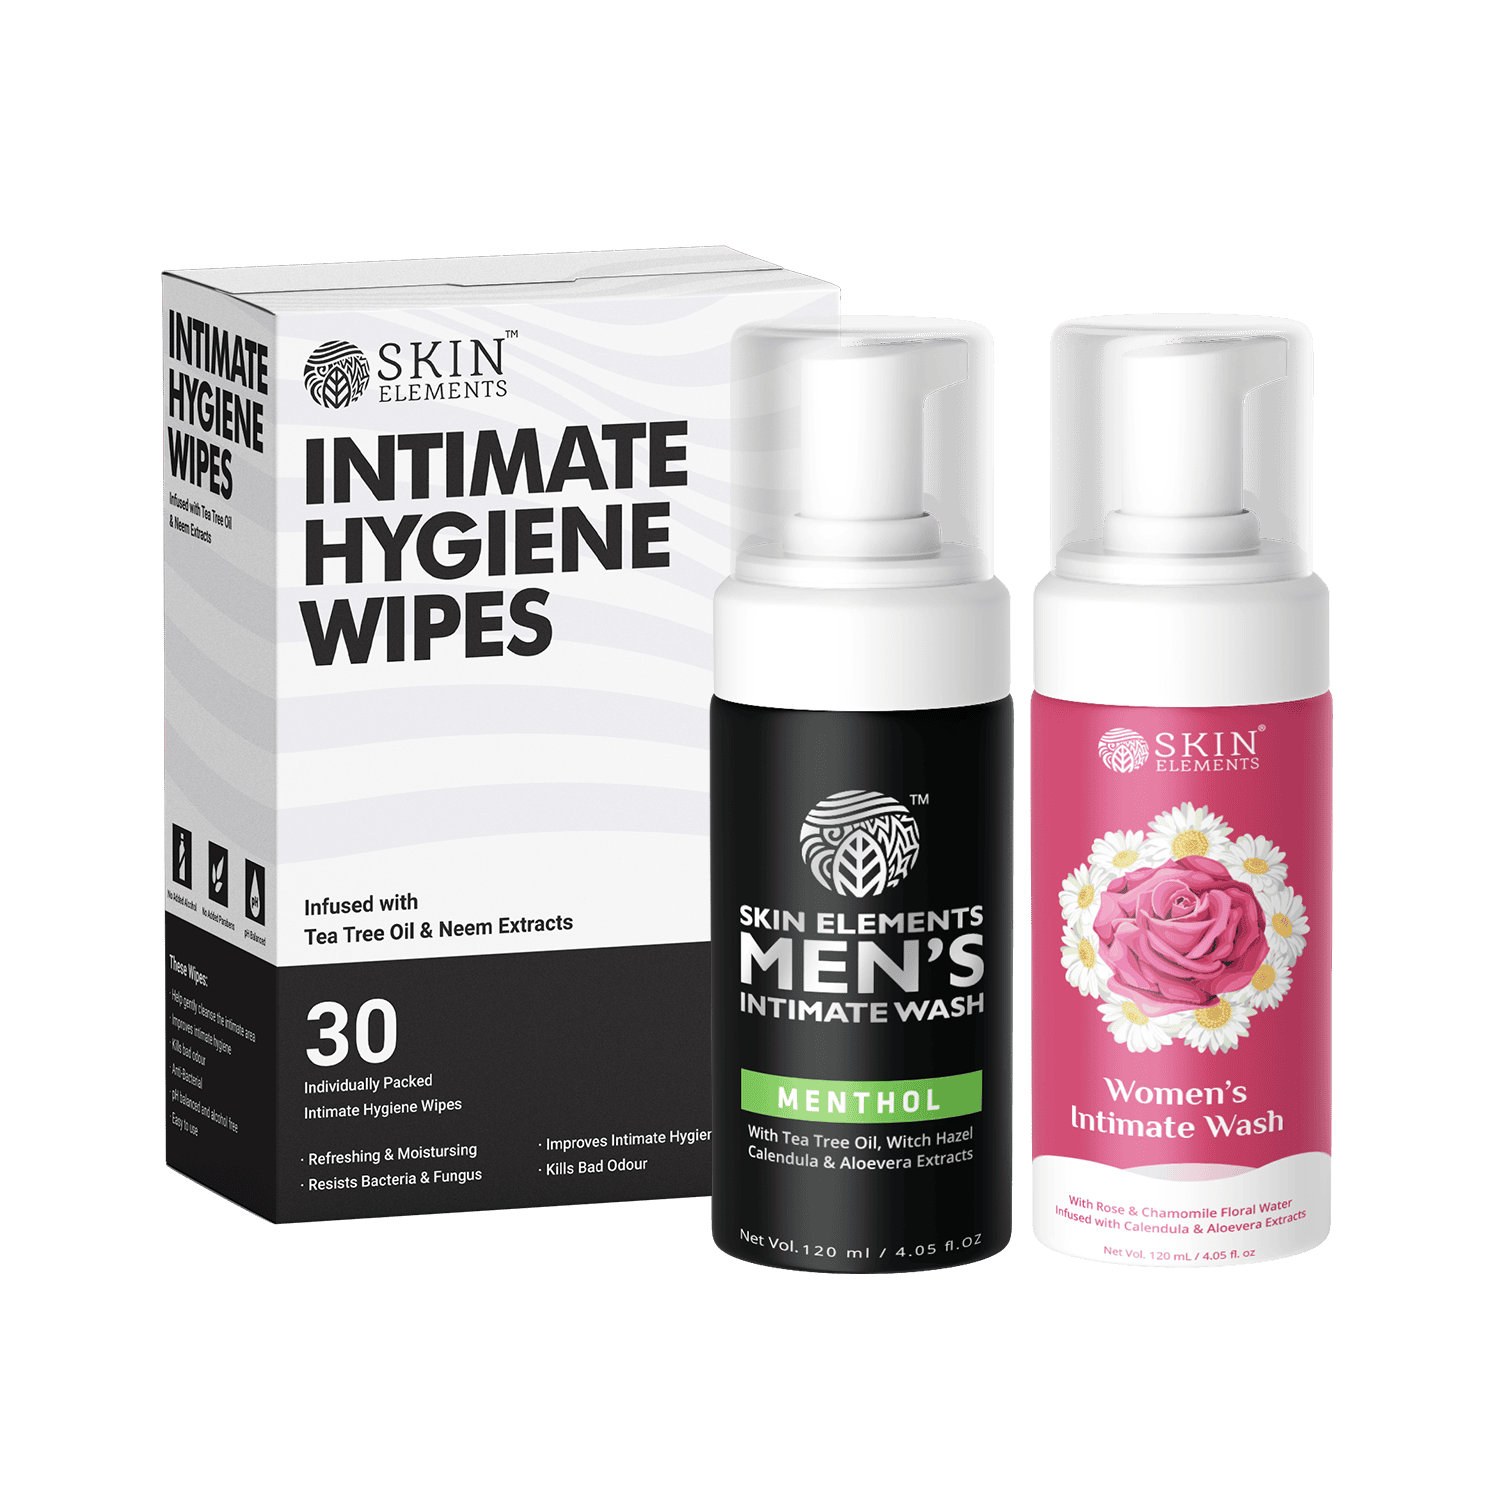 Intimate hygiene wipes + Intimate Wash